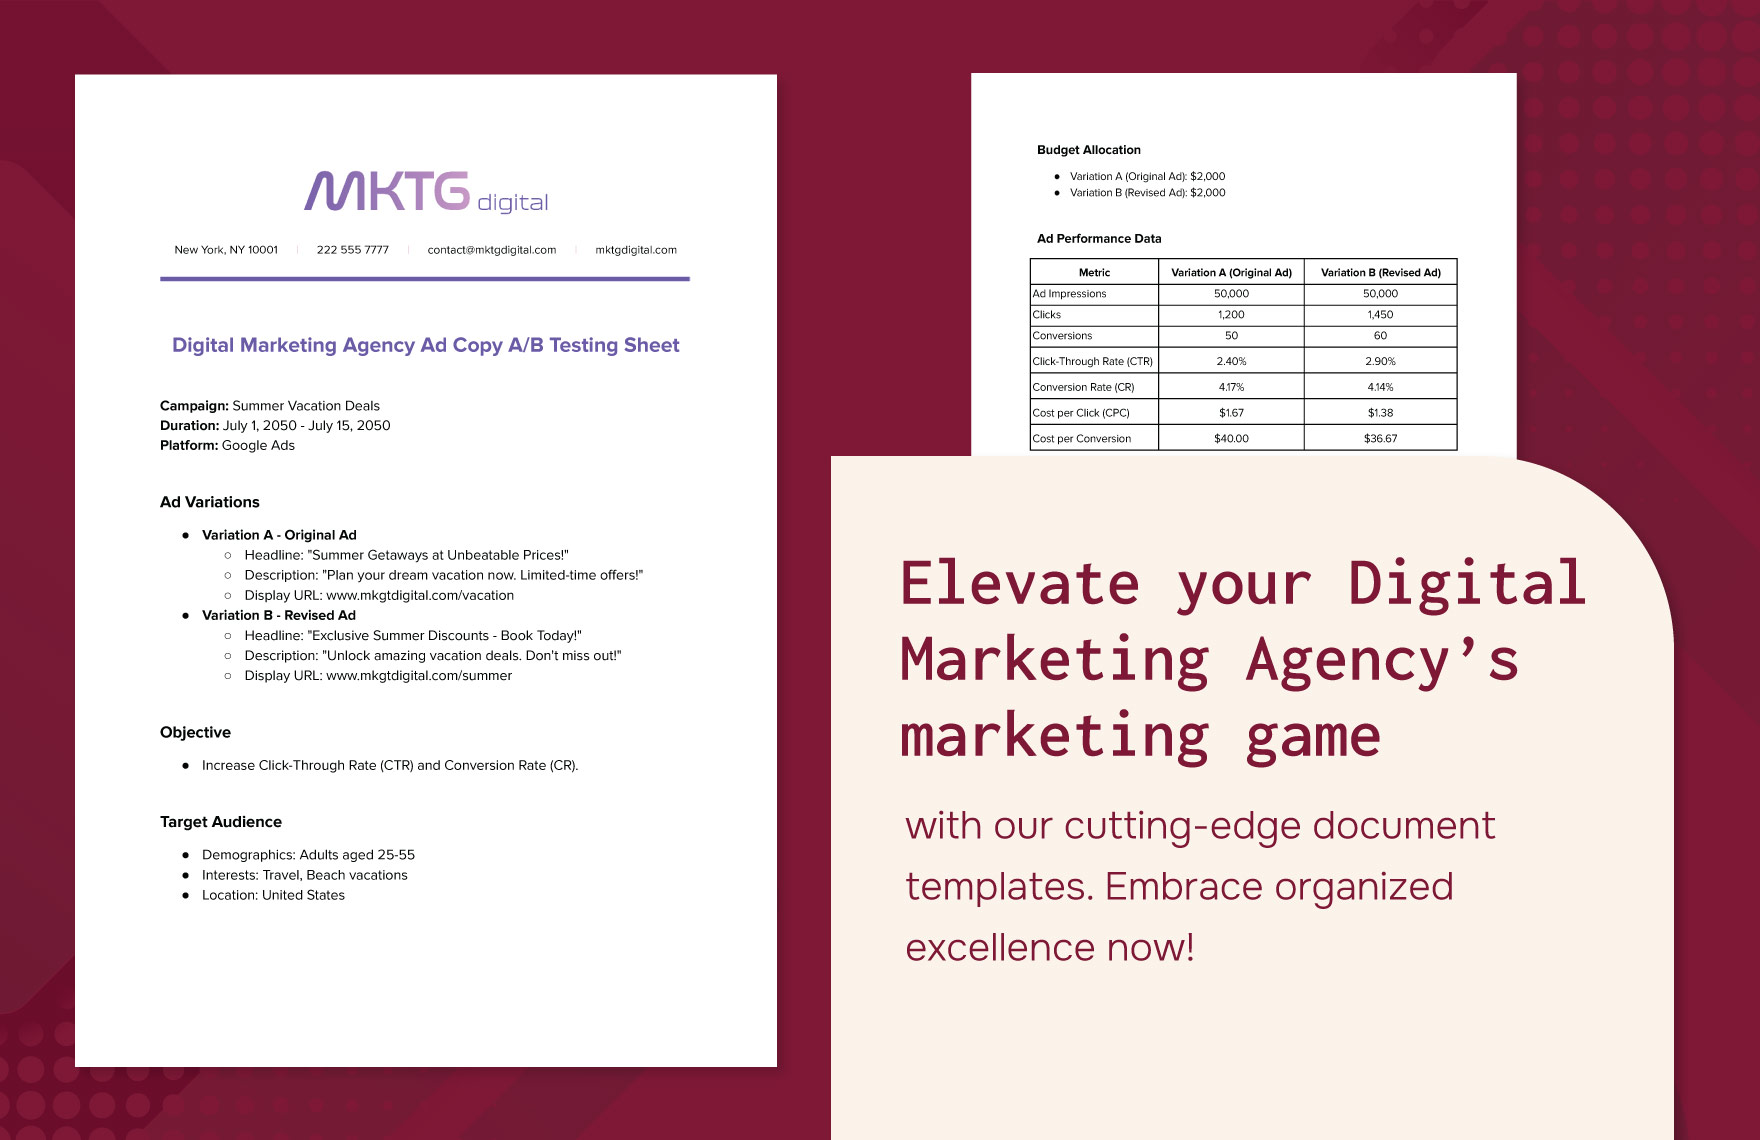 Digital Marketing Agency Ad Copy A/B Testing Sheet Template